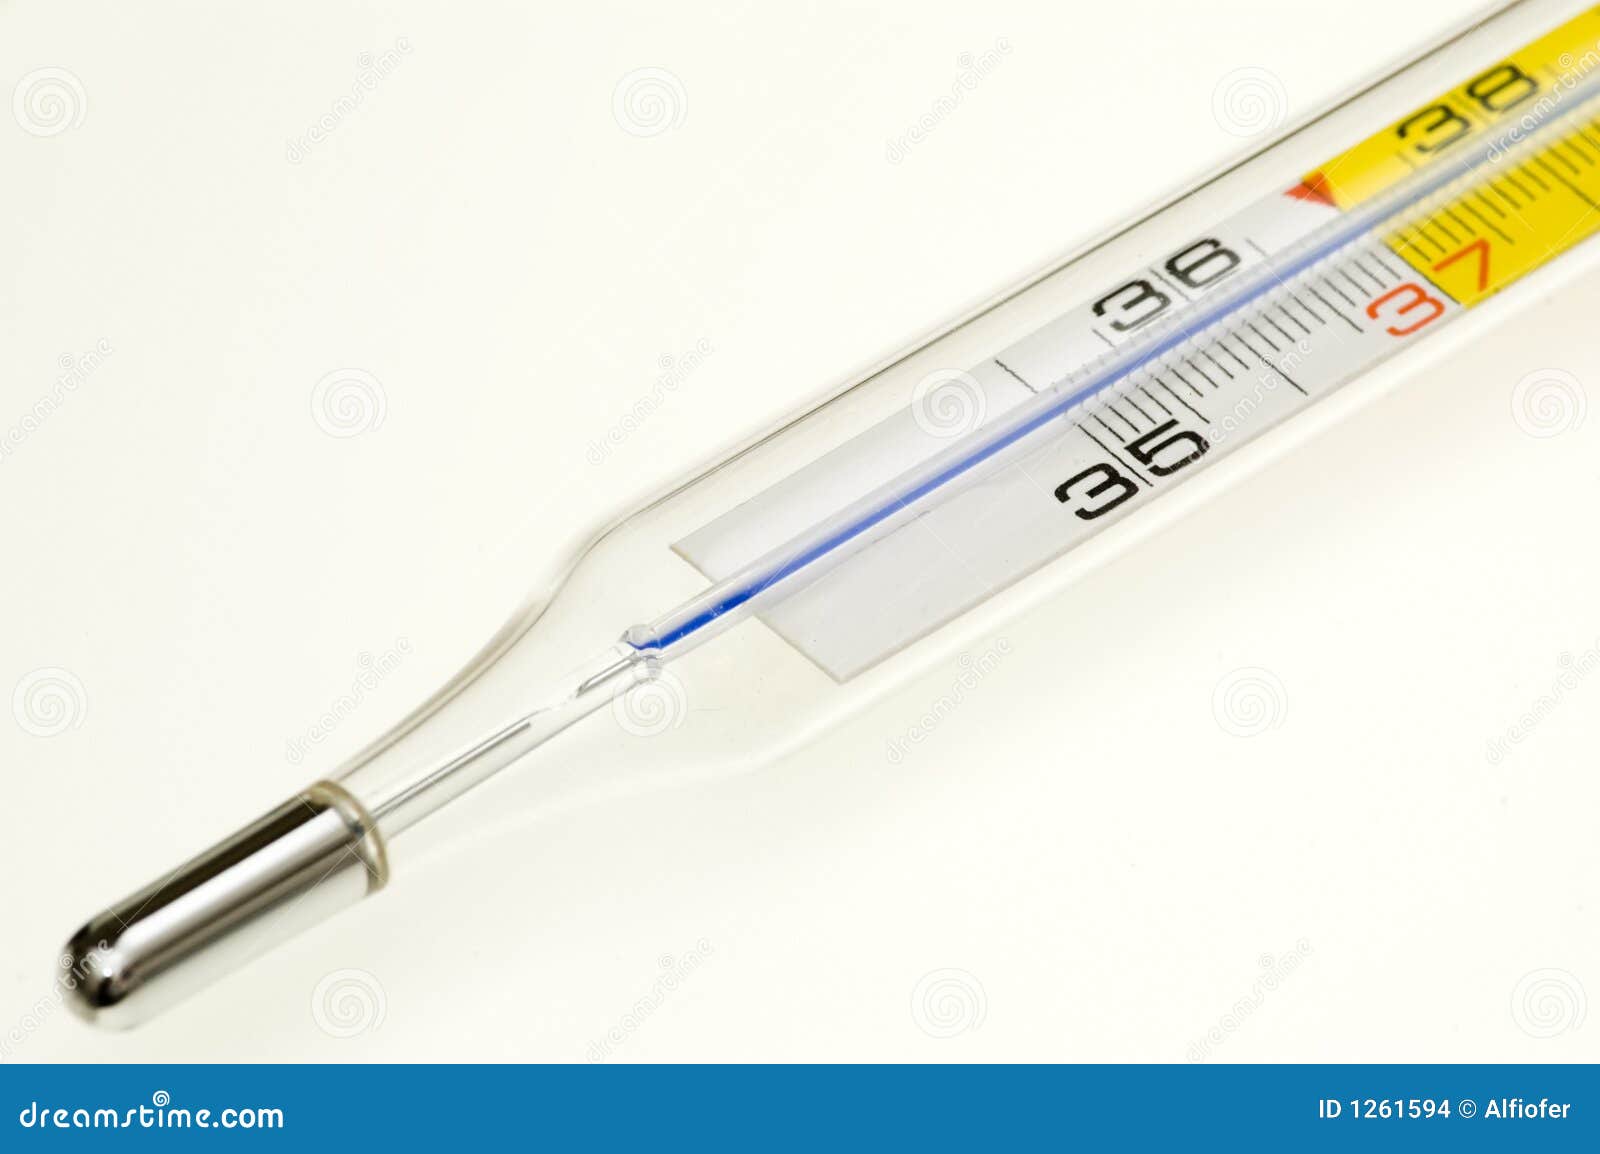 vertegenwoordiger doen alsof halfrond Oral thermometer stock photo. Image of detailed, oral - 1261594